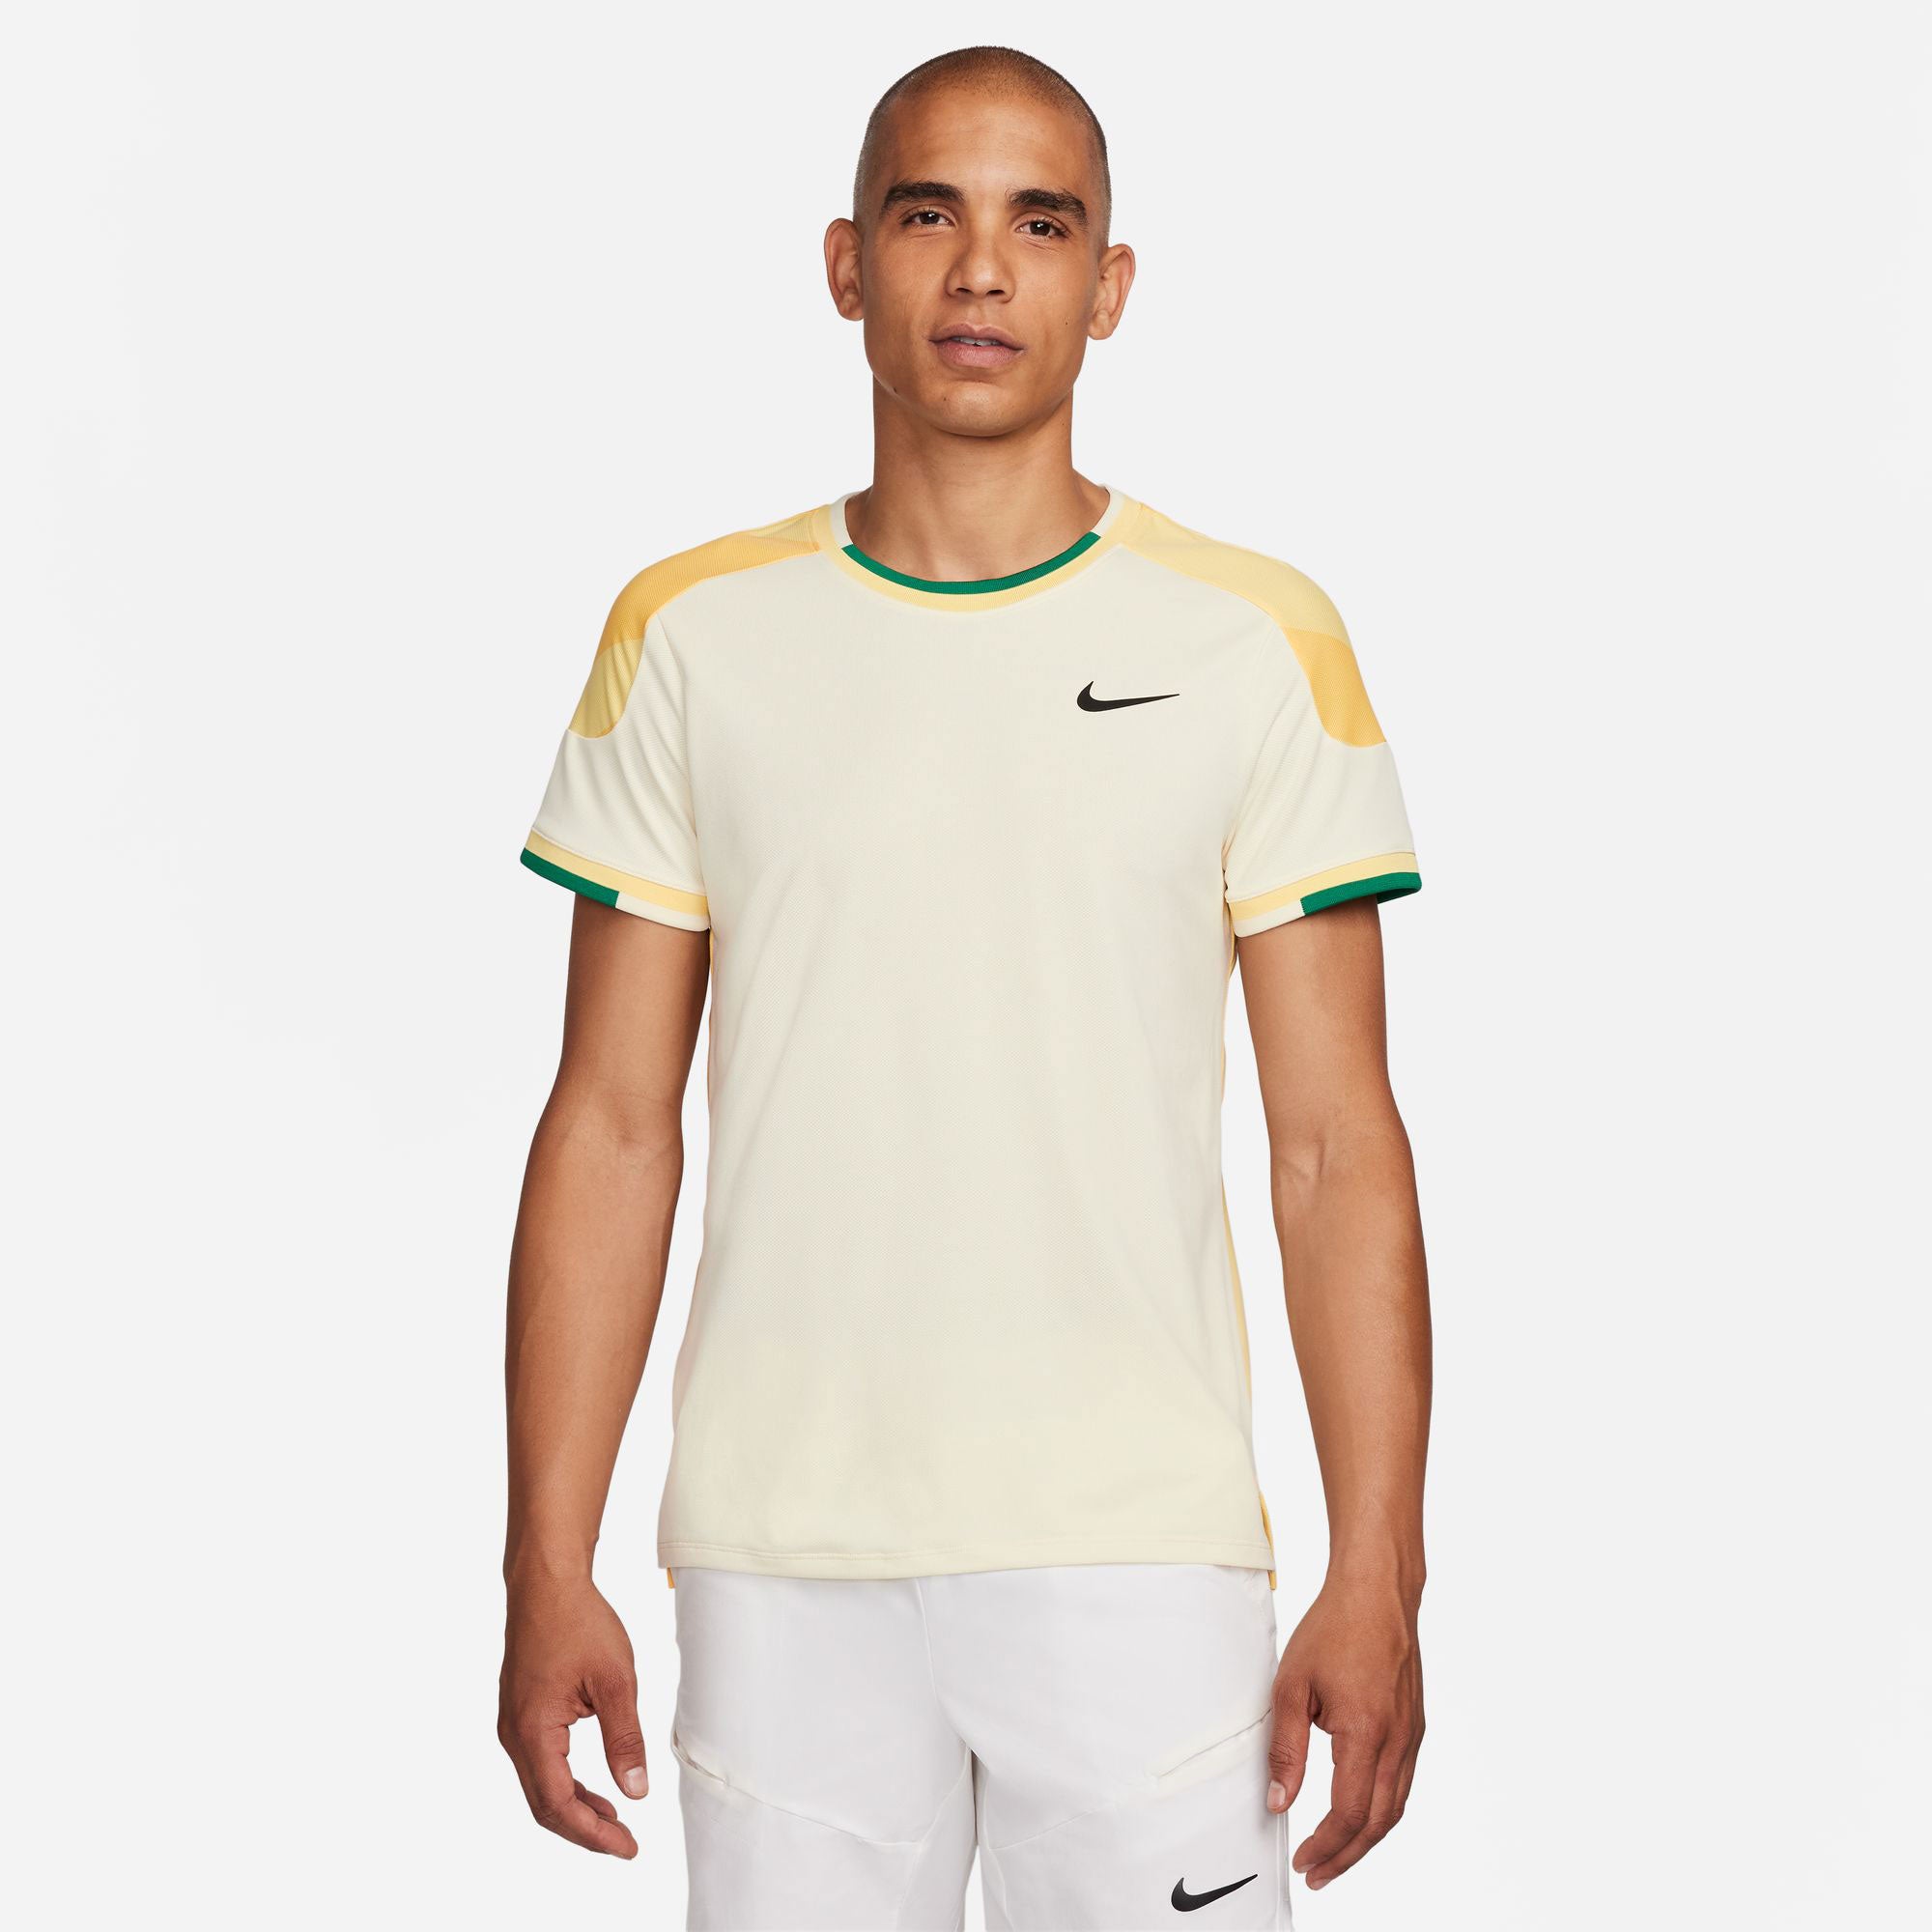 NikeCourt Slam Melbourne Men's Dri-FIT Tennis Shirt - White (1)